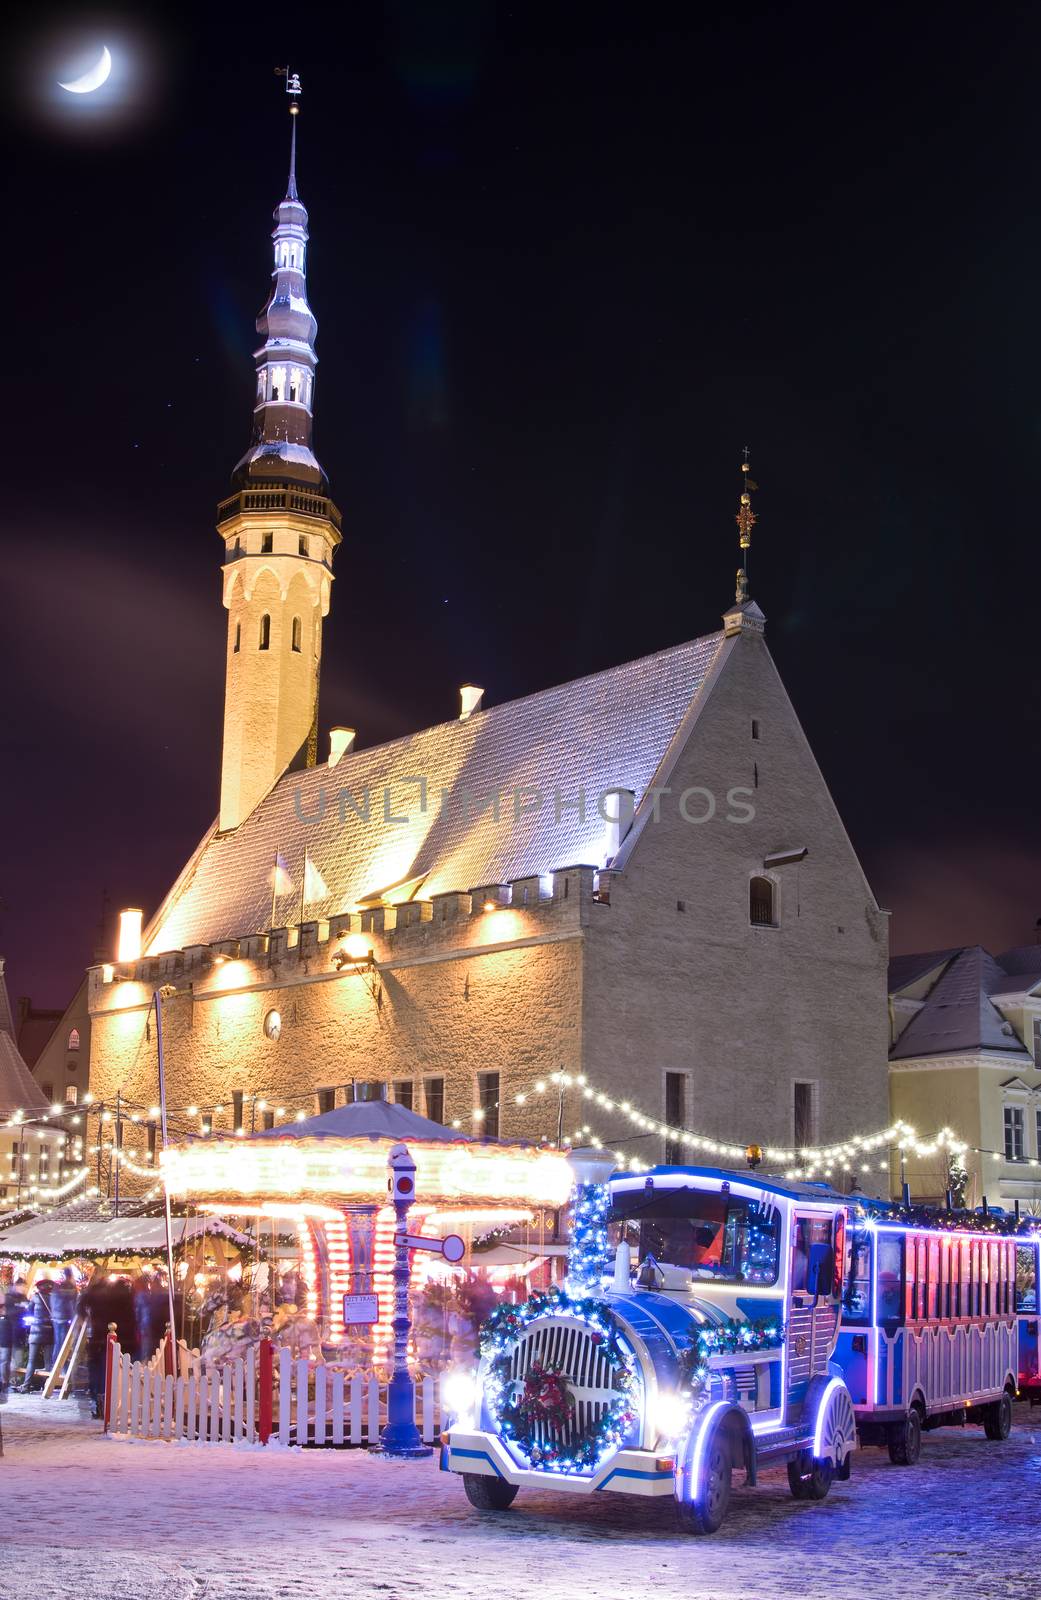 Christmas market and christmas train near city hall in old city of Tallinn, Estonia